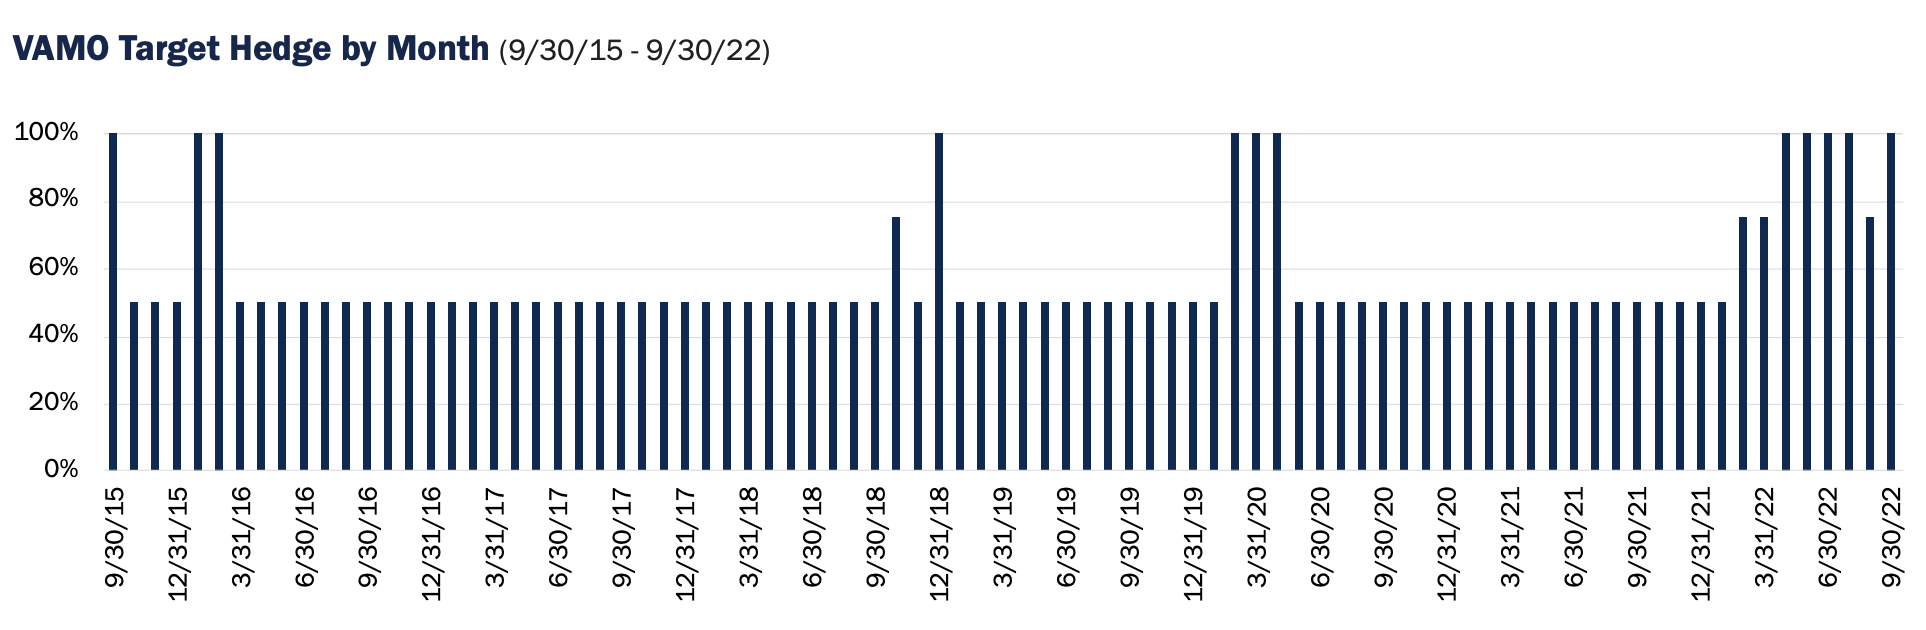 VAMO ETF Target Hedge By Month